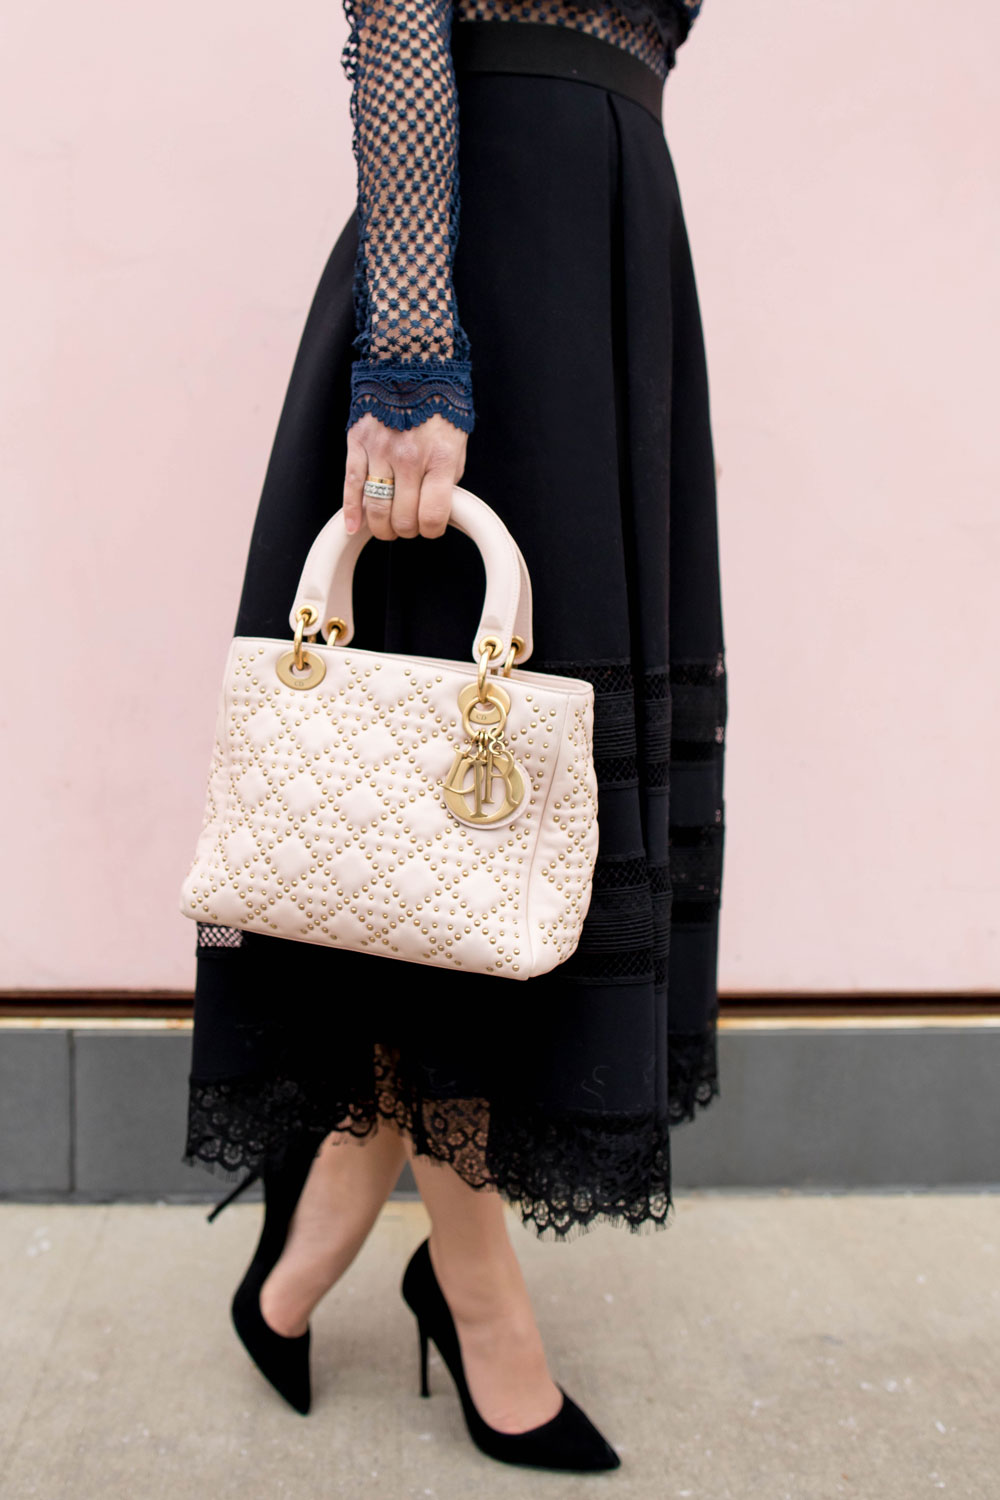 Christian Dior Lady Dior Studded Denim Handbag